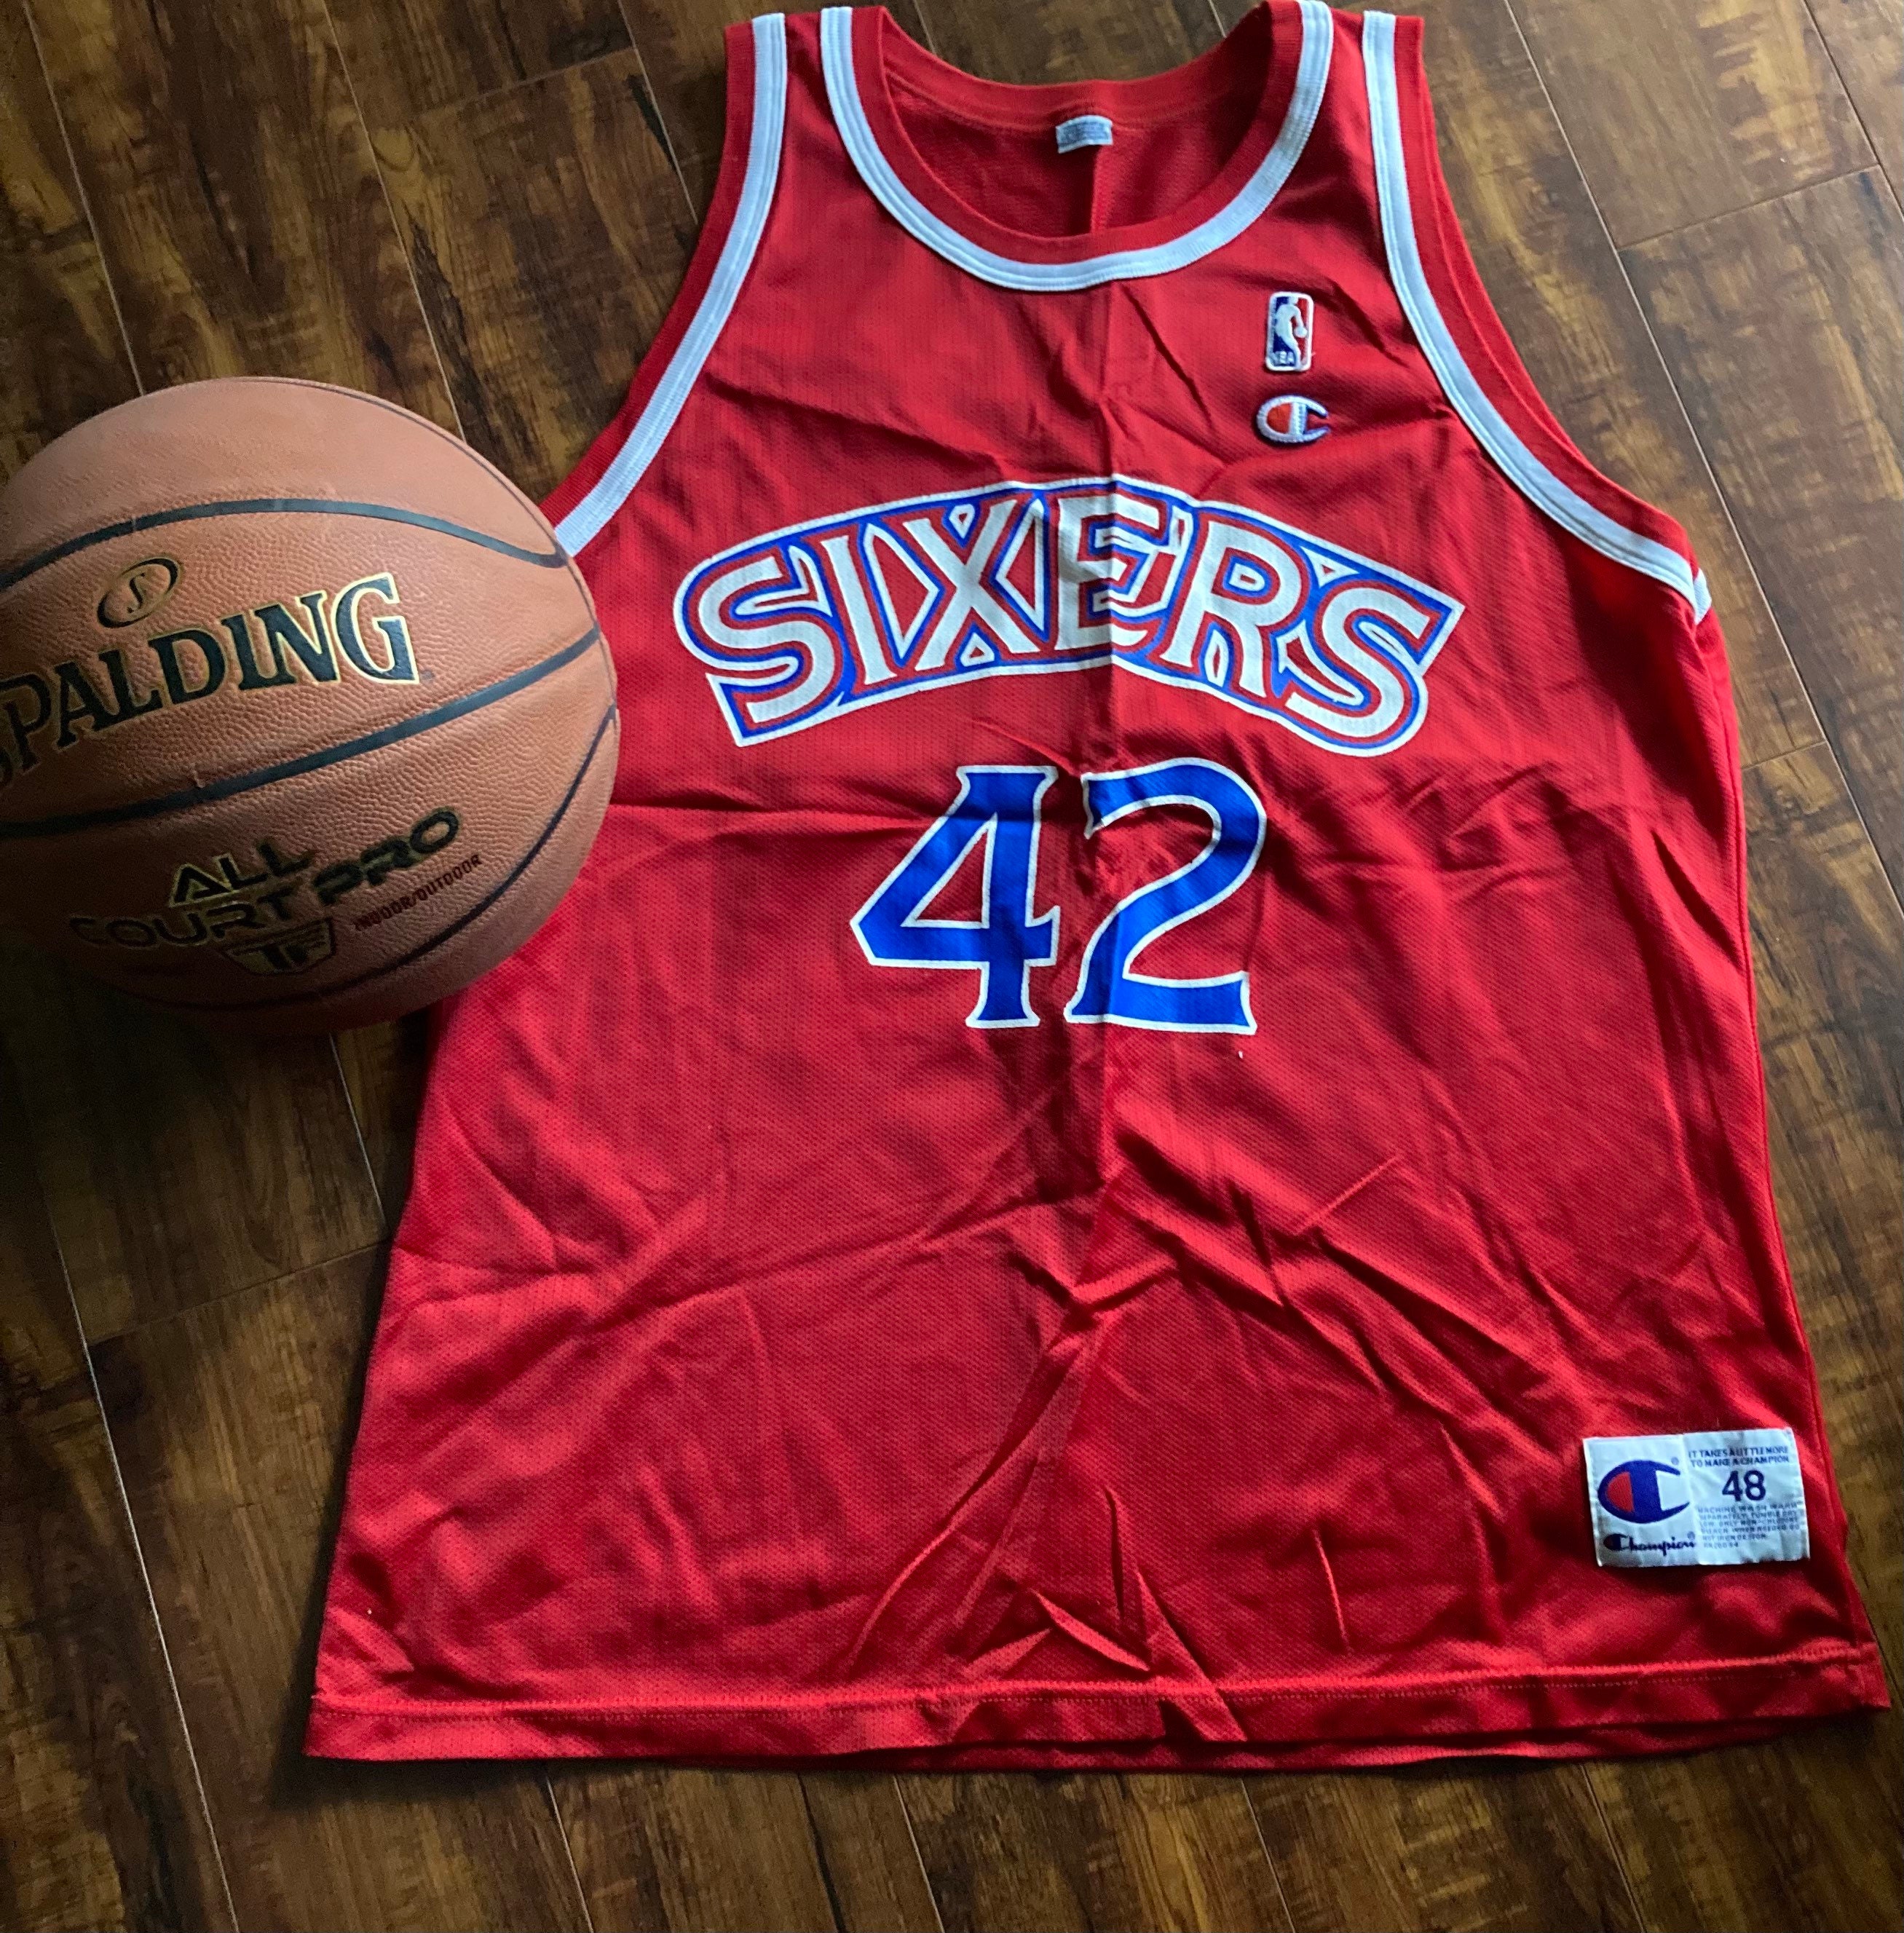 NBA_ 1 James Harden Joel Embiid Basketball Jersey Allen Iverson Julius  Erving Mens Shirts Vintage Jerseys 3 6 21 